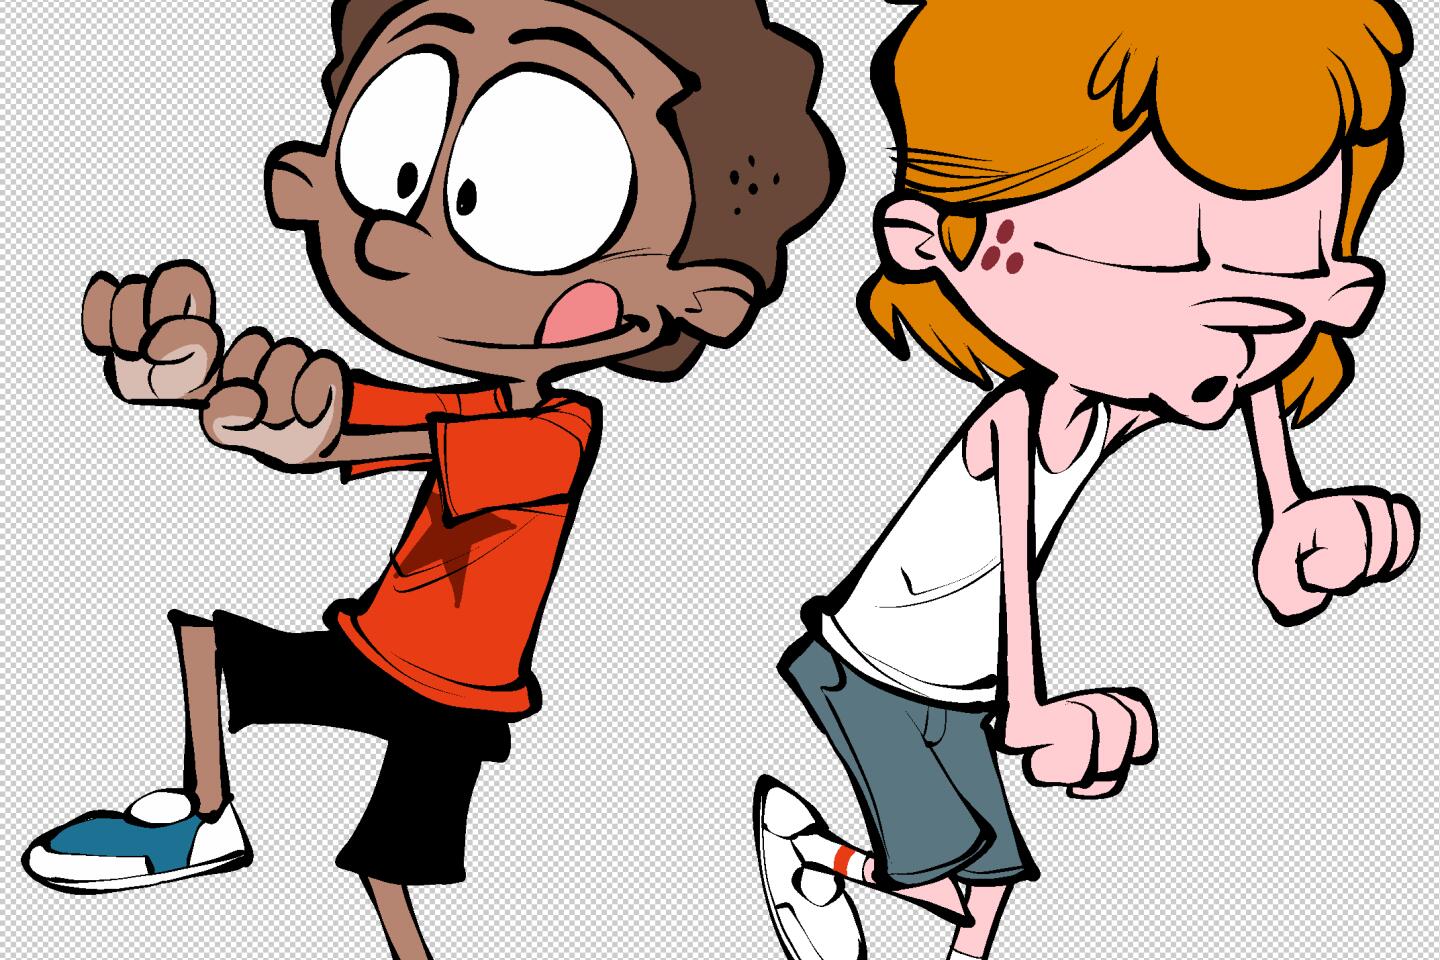 Illustration of two boyhood friends dancing